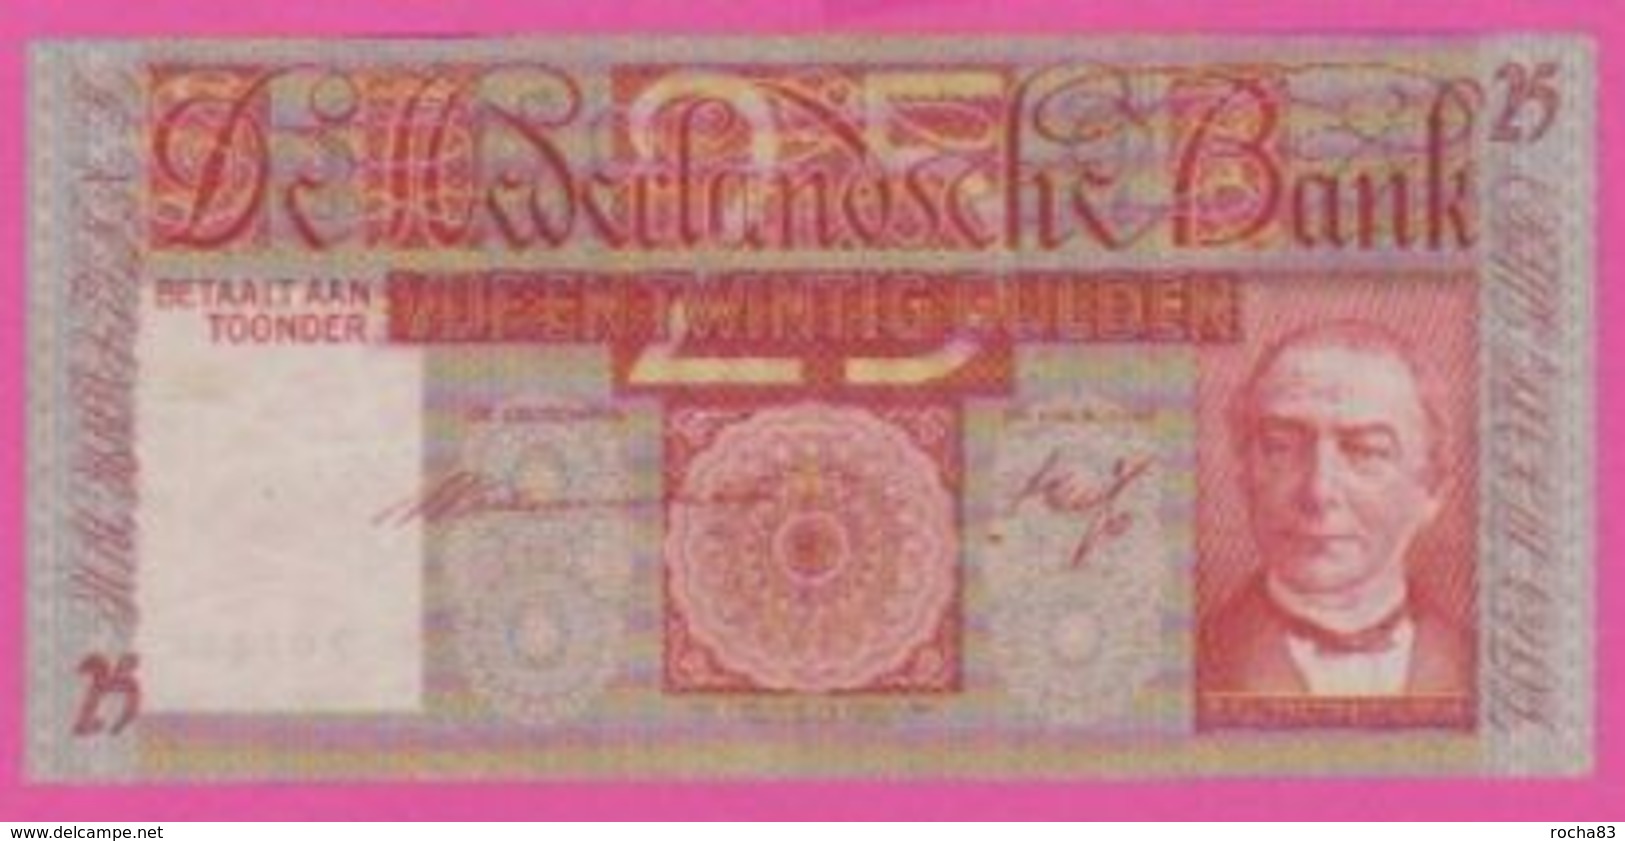 NETHERLANDS - PAYS BAS - 25 Gulden Du 09 03 1939  - Pick 50 TTB - 25 Gulden